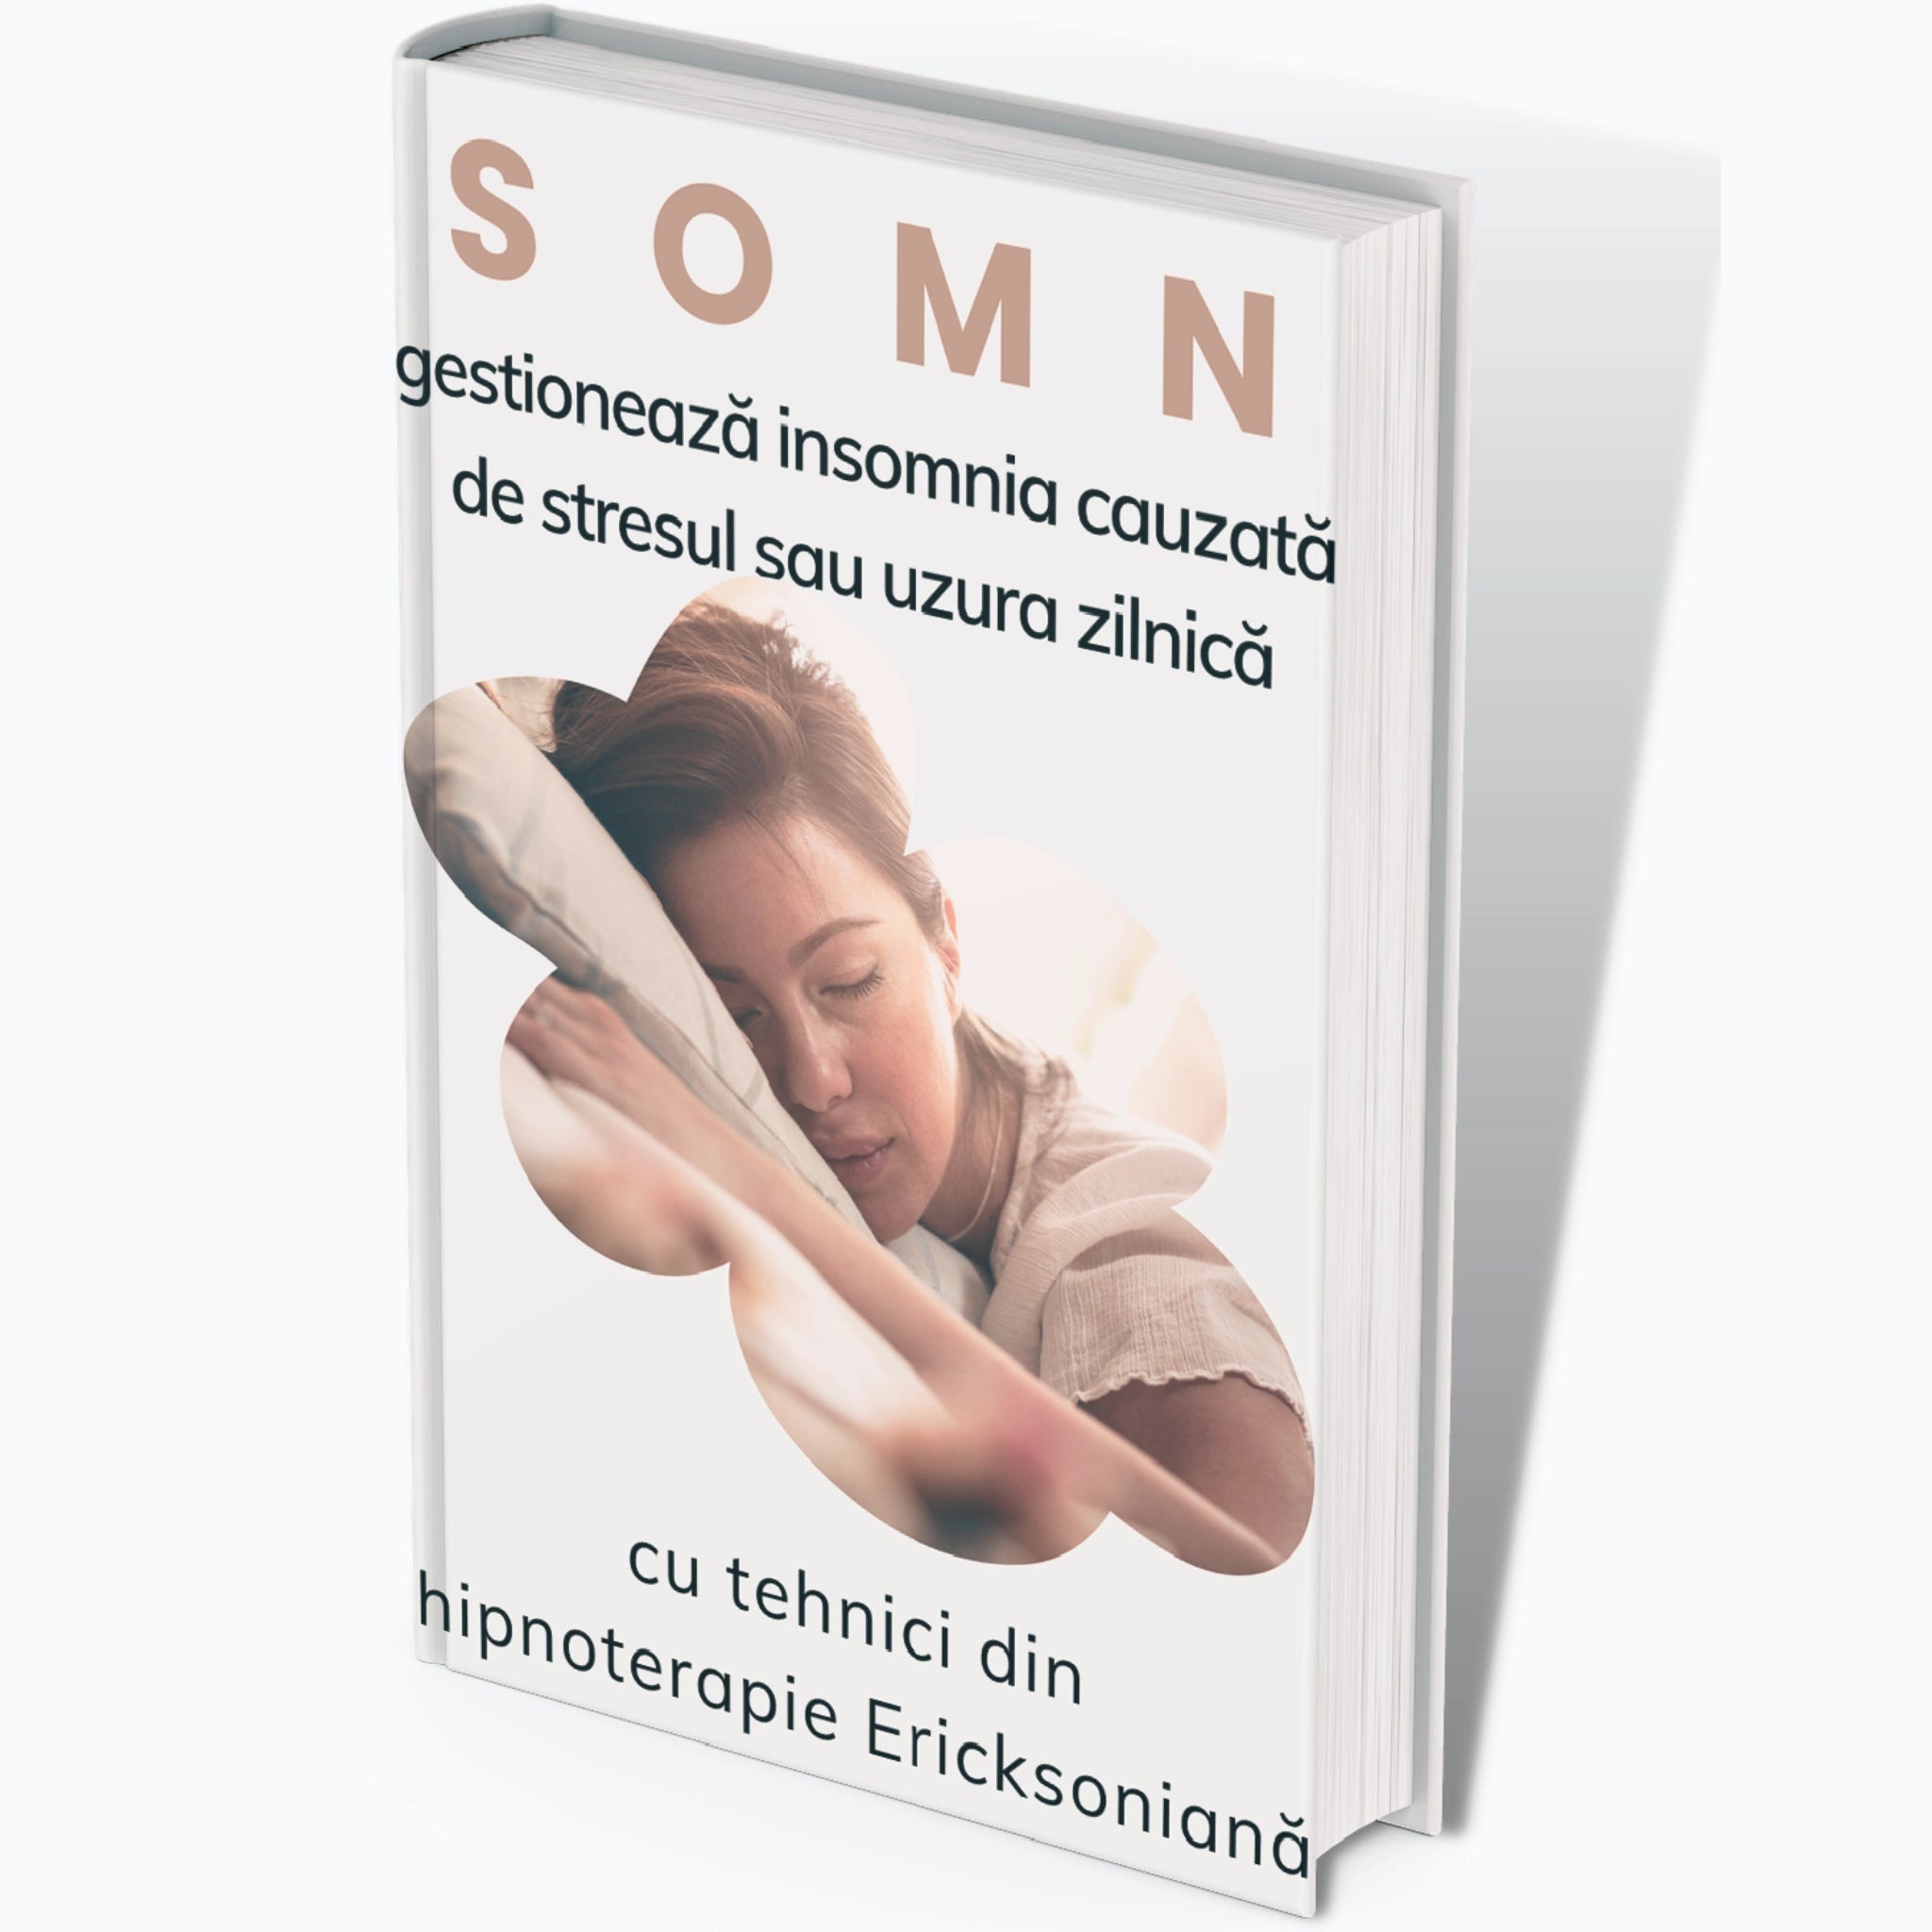 Coperta audiobook "Somn: gestioneaza insomnia cauzata de stresul sau uzura zilnica"